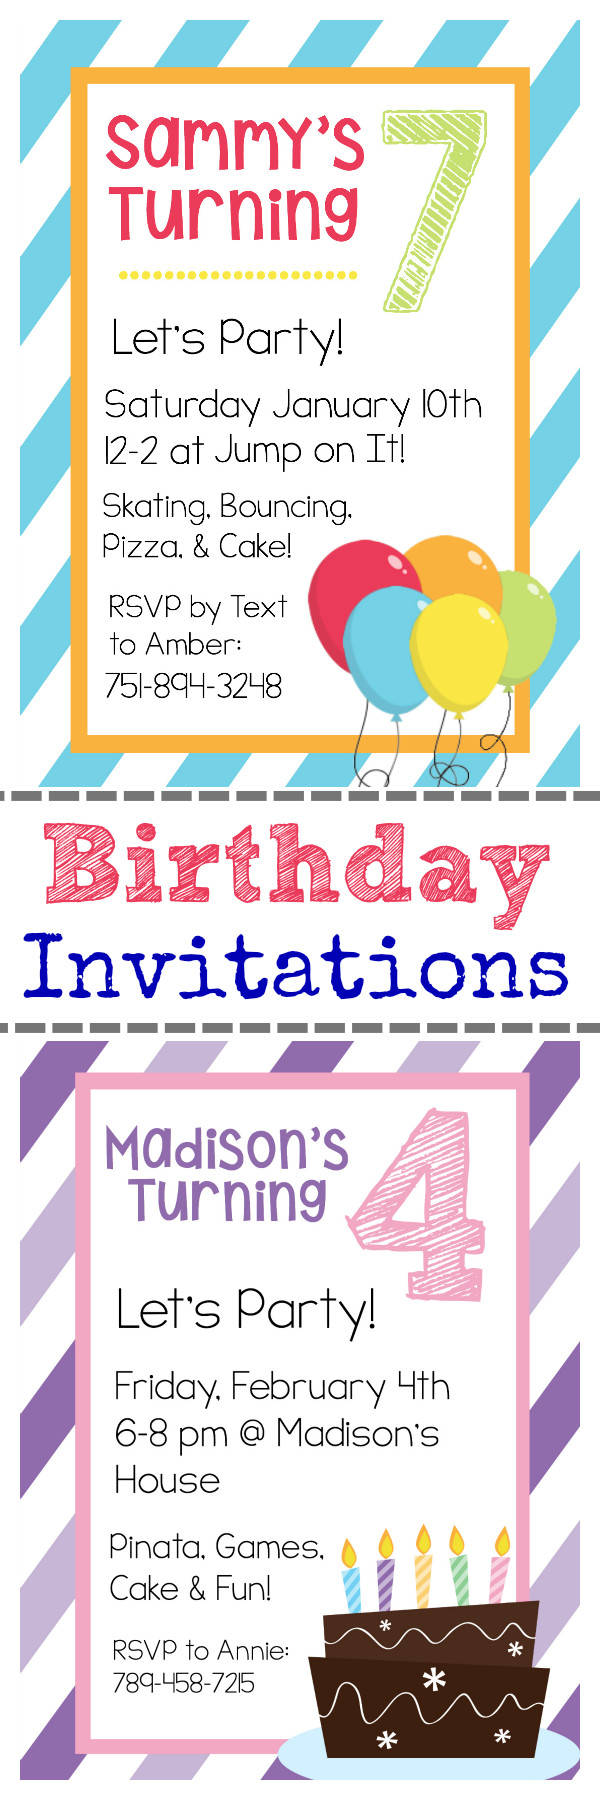 Birthday Online Invitations
 Free Printable Birthday Invitation Templates